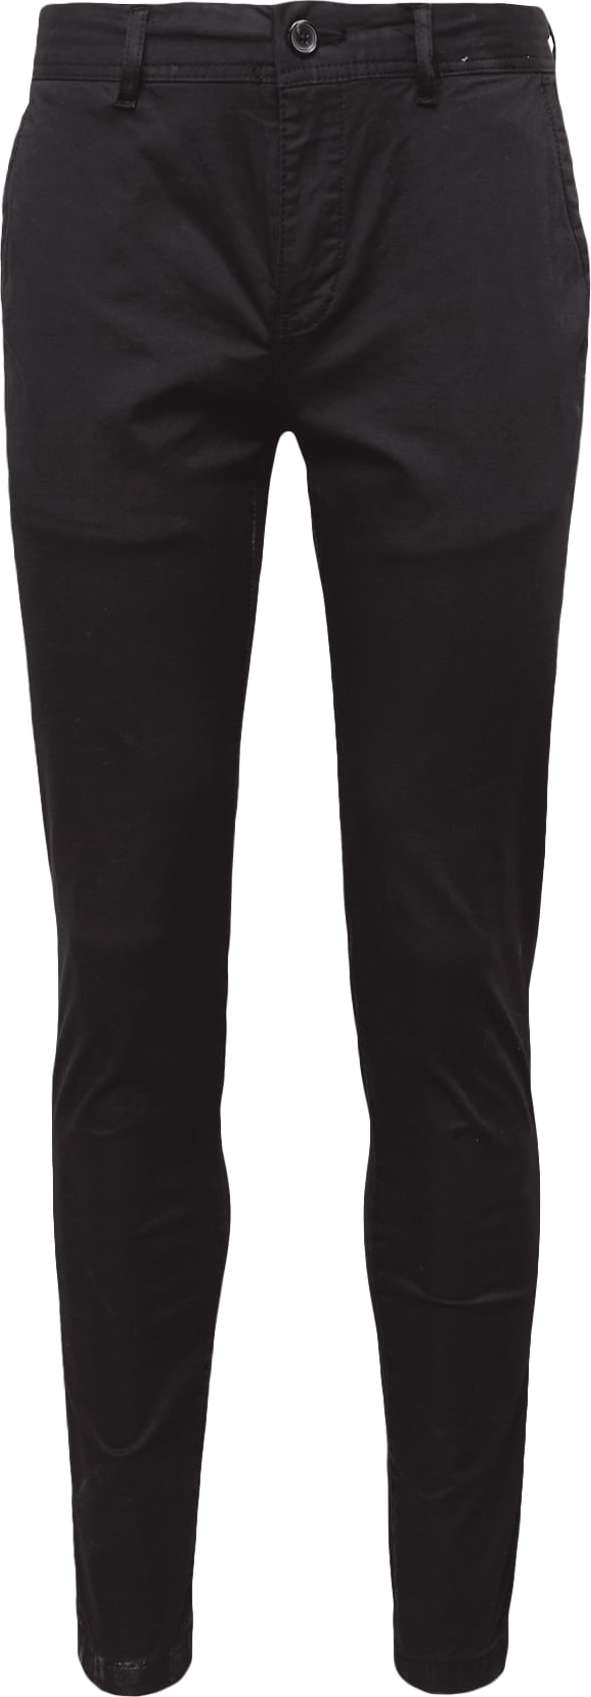 SCOTCH & SODA Chino kalhoty 'Mott' černá